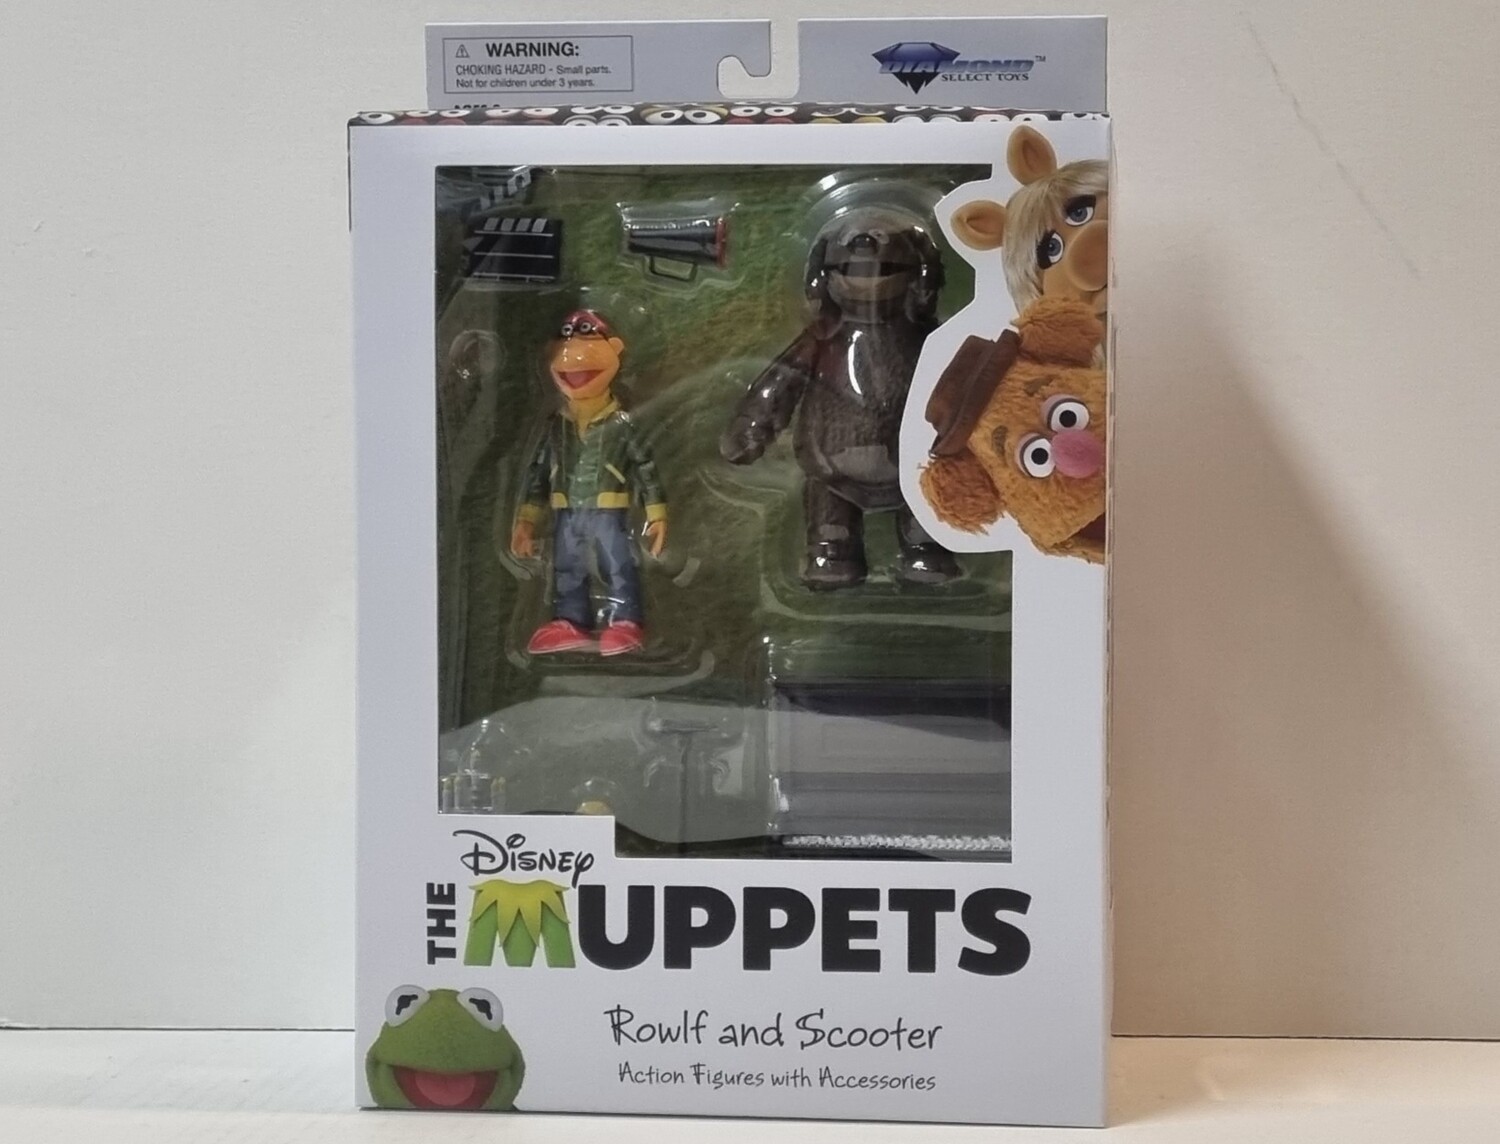 Actiefiguren, Rowlf and scooter, The Muppets, Disney